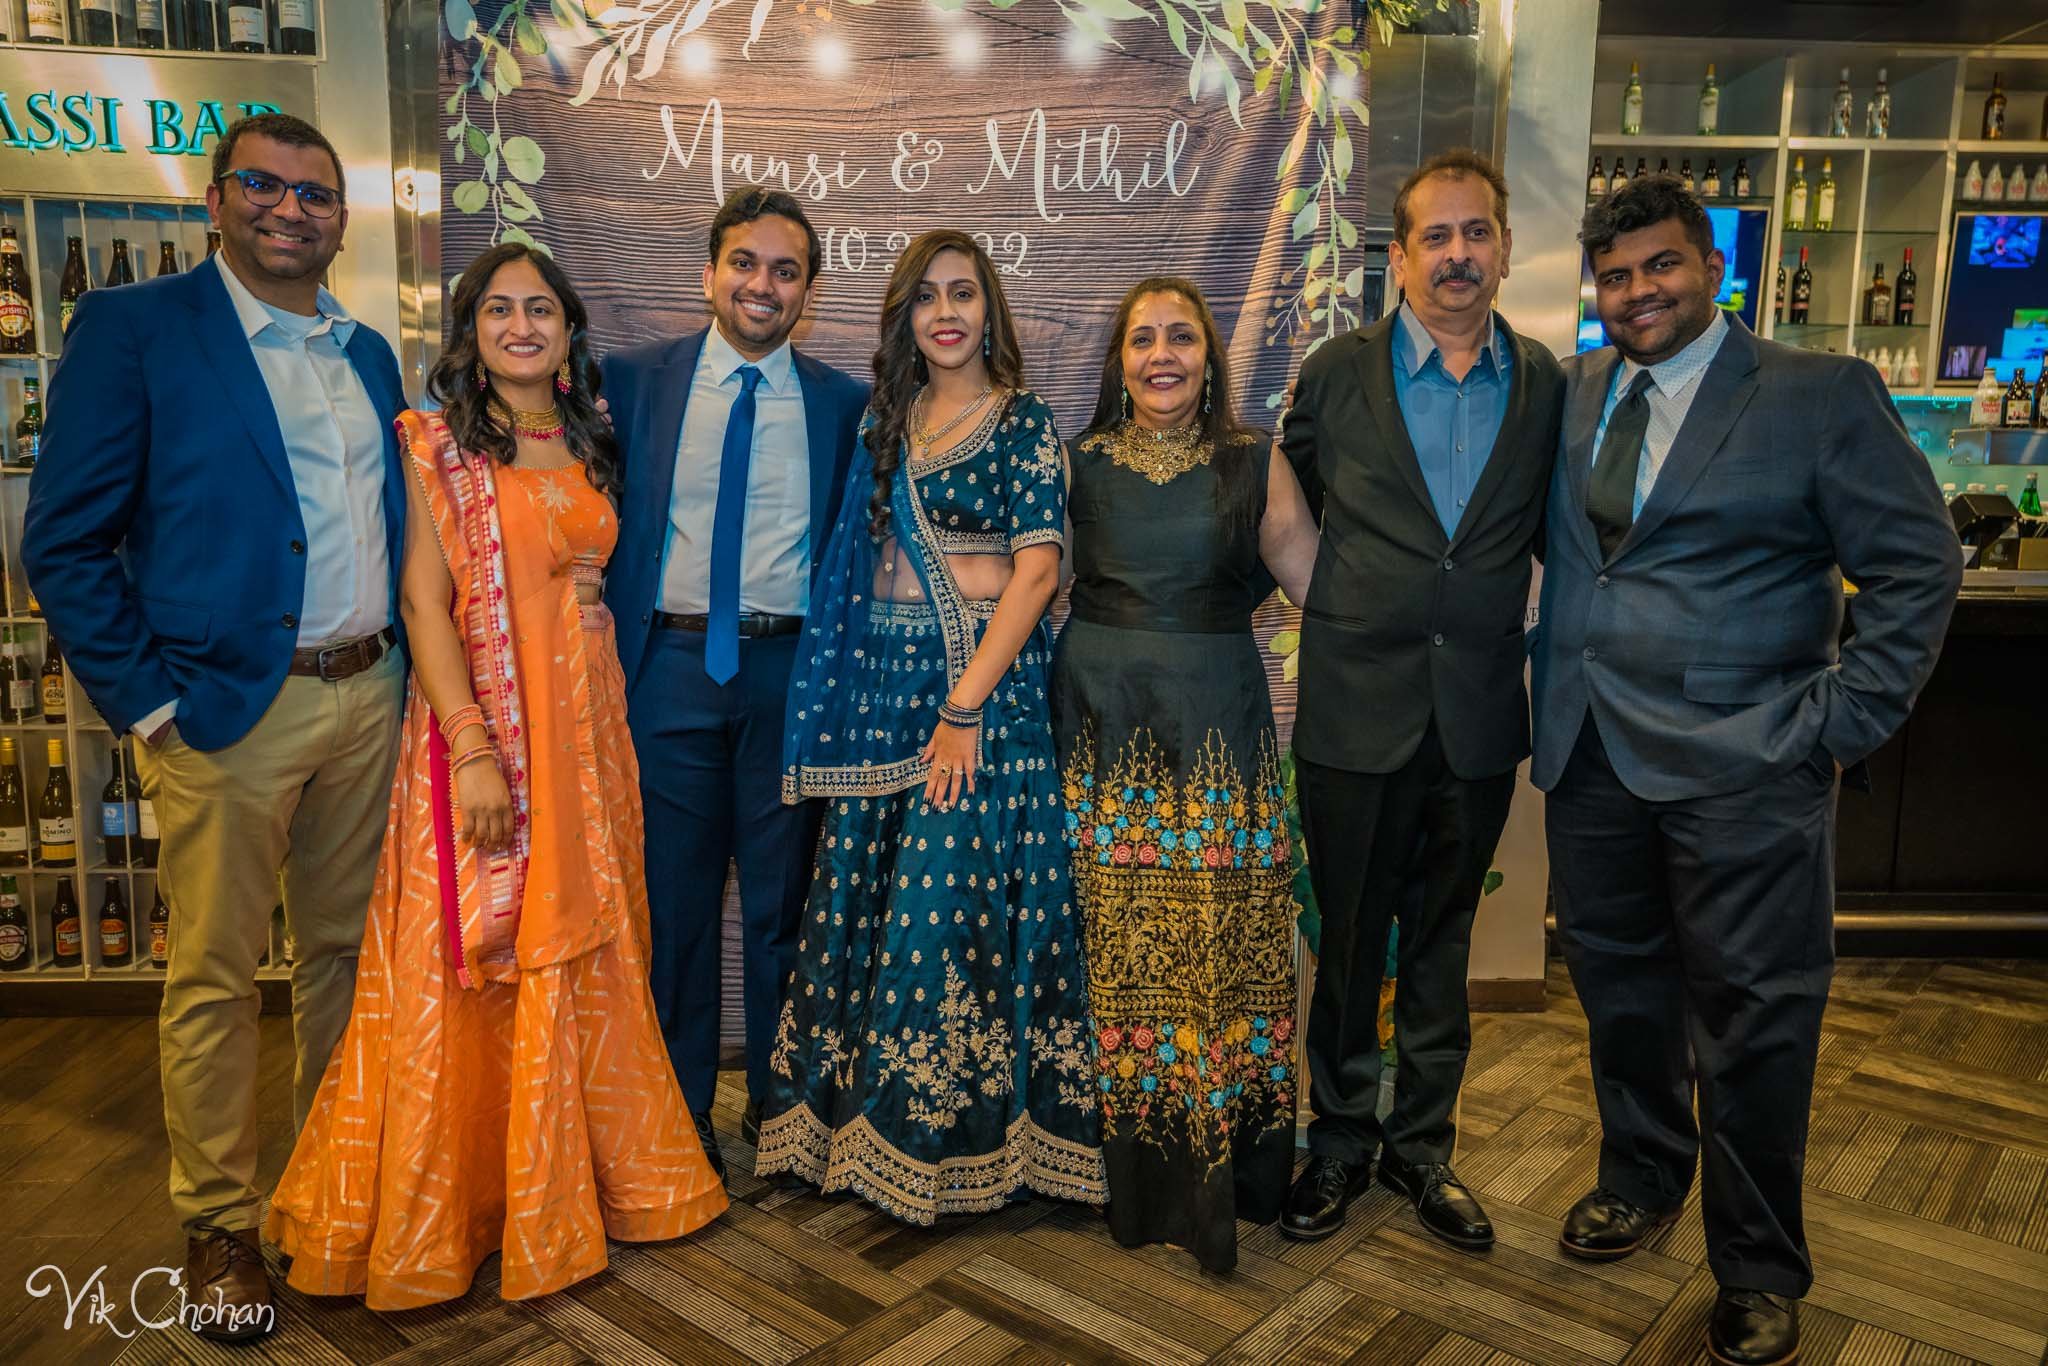 2022-10-22-Mansi-and-Mithil-Wedding-Reception-Dinner-Vik-Chohan-Photography-Photo-Booth-Social-Media-VCP-V2-009.jpg